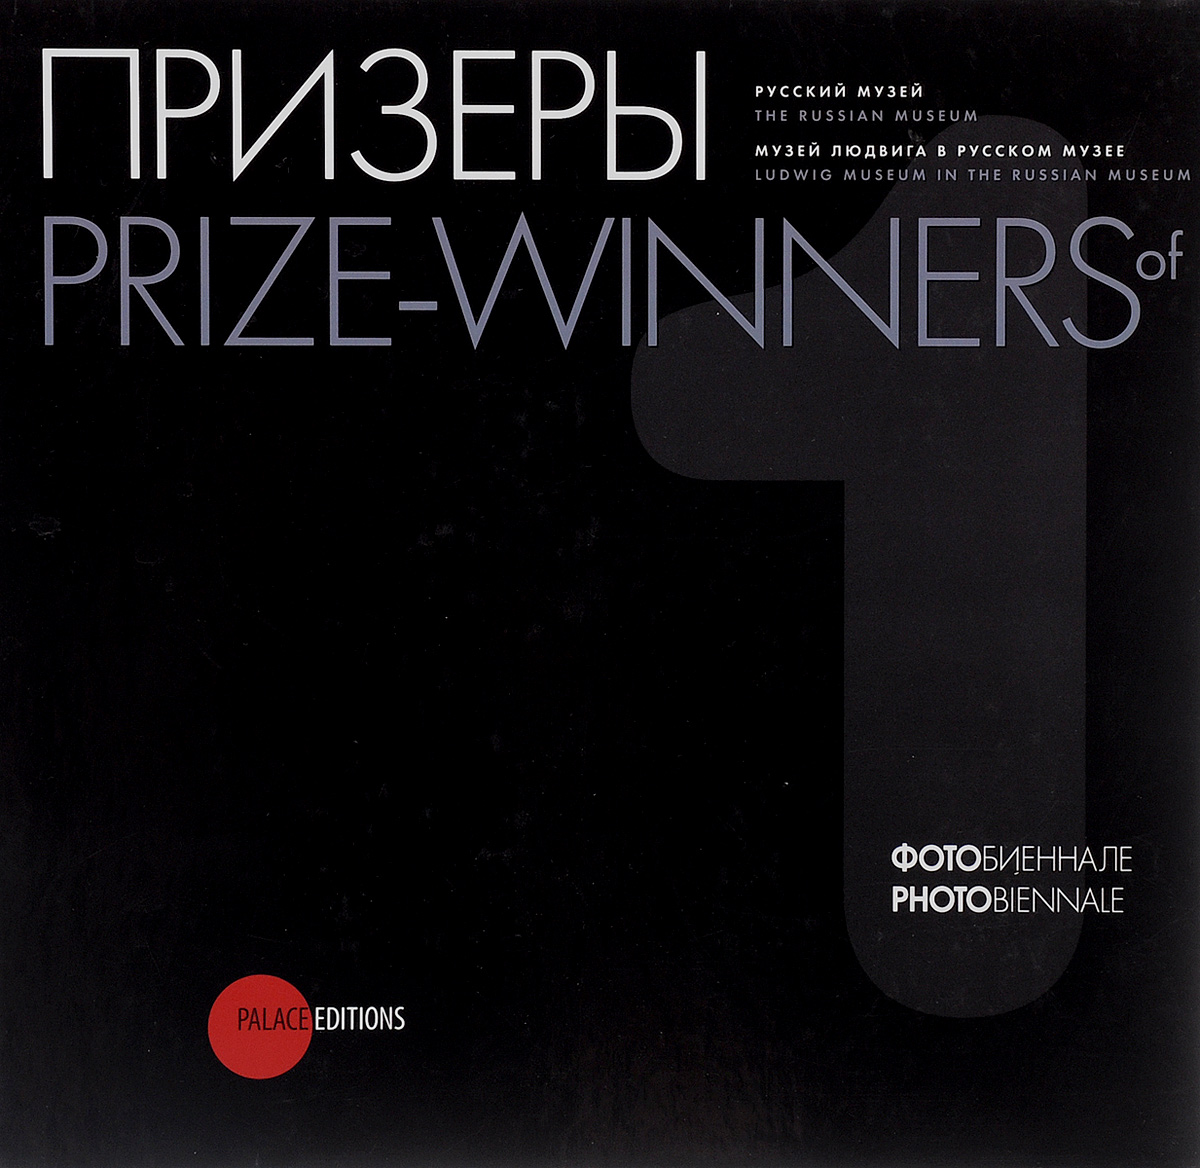 Призеры фотобиеннале. Альманах, № 285, 2010 / Prize-Winners of Photobiennale: Almanac: Edition 285: 2010